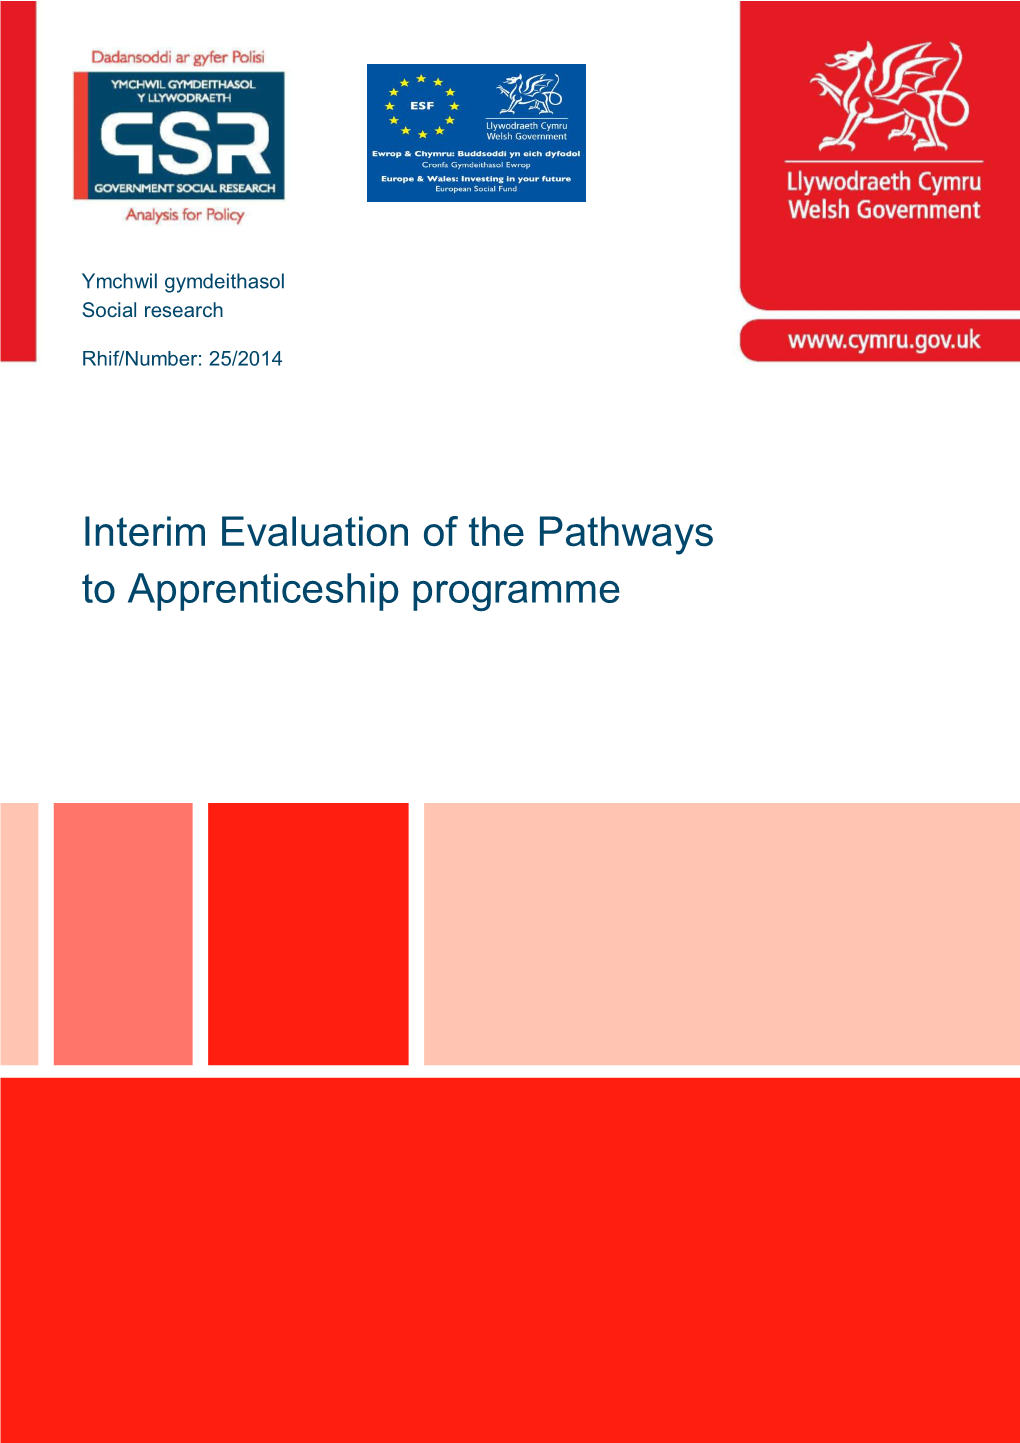 Interim Evaluation of the Pathways to Apprenticeship Programme